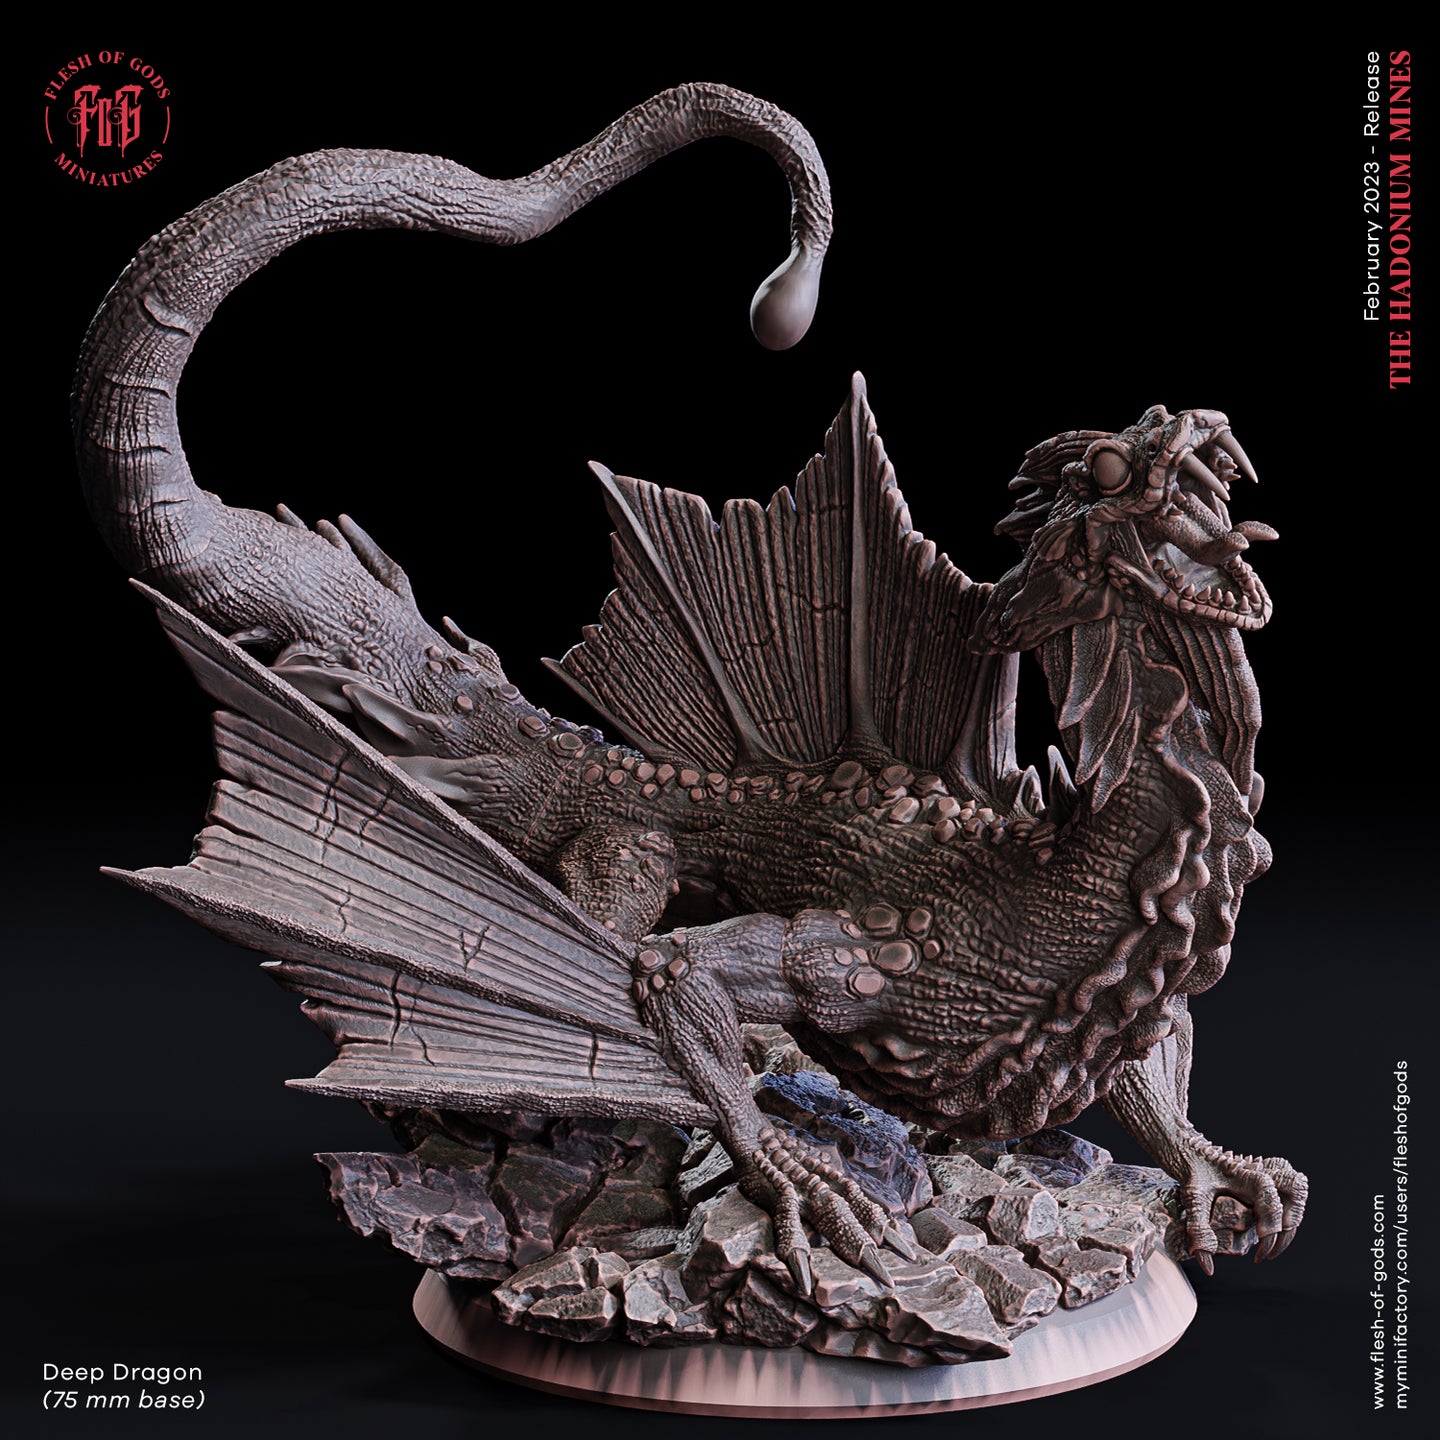 Deep Dragon - The Hadonium Mines - Flesh of Gods - Wargaming D&D DnD